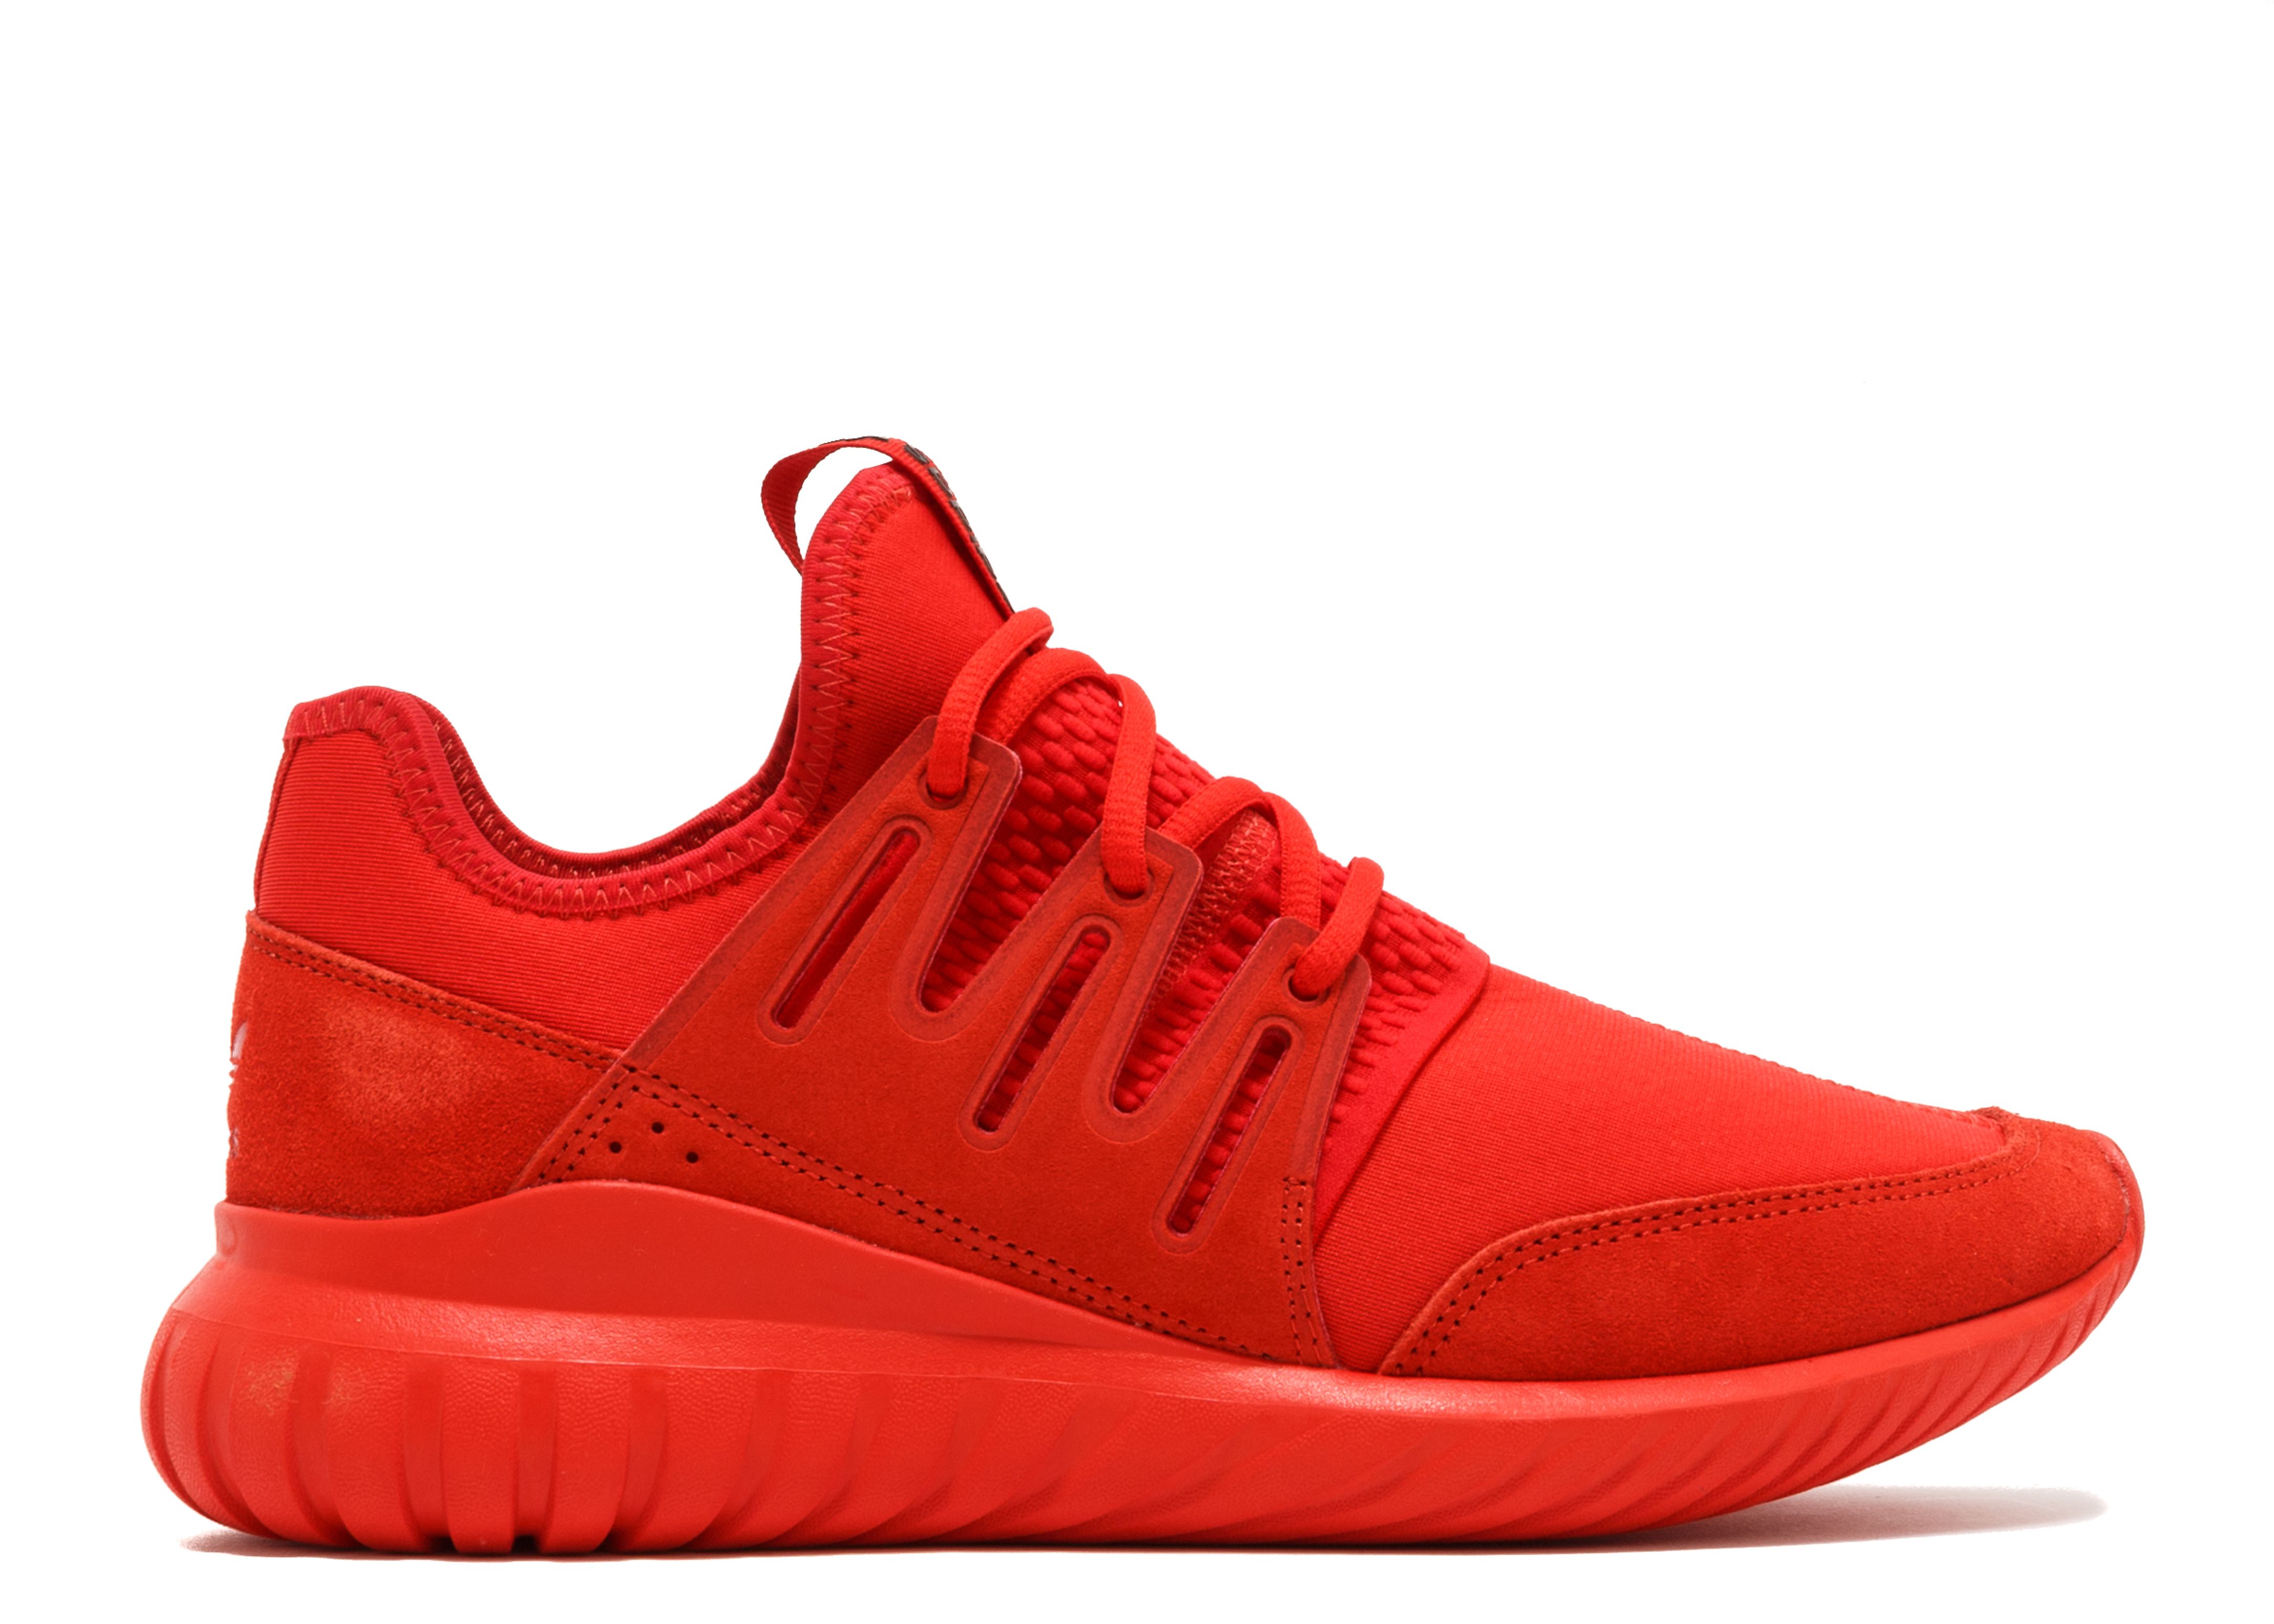 adidas tubular radial red cheap online